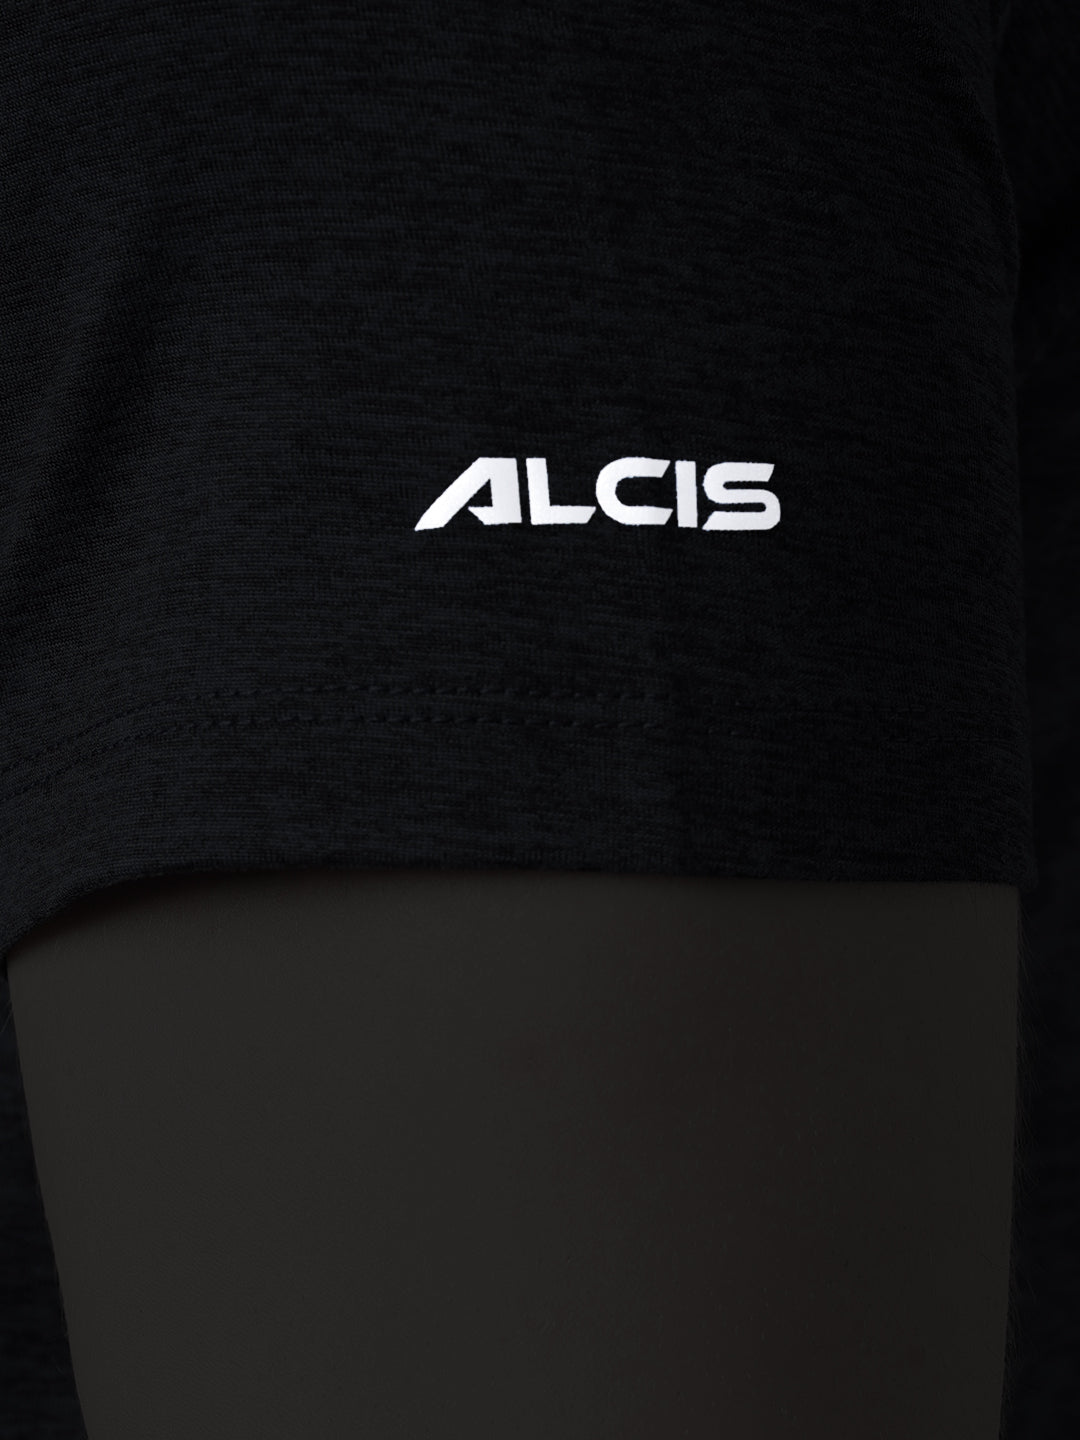 Alcis Men's Blue & Black Anti-Static Drytech+ Slim-Fit Training Tee